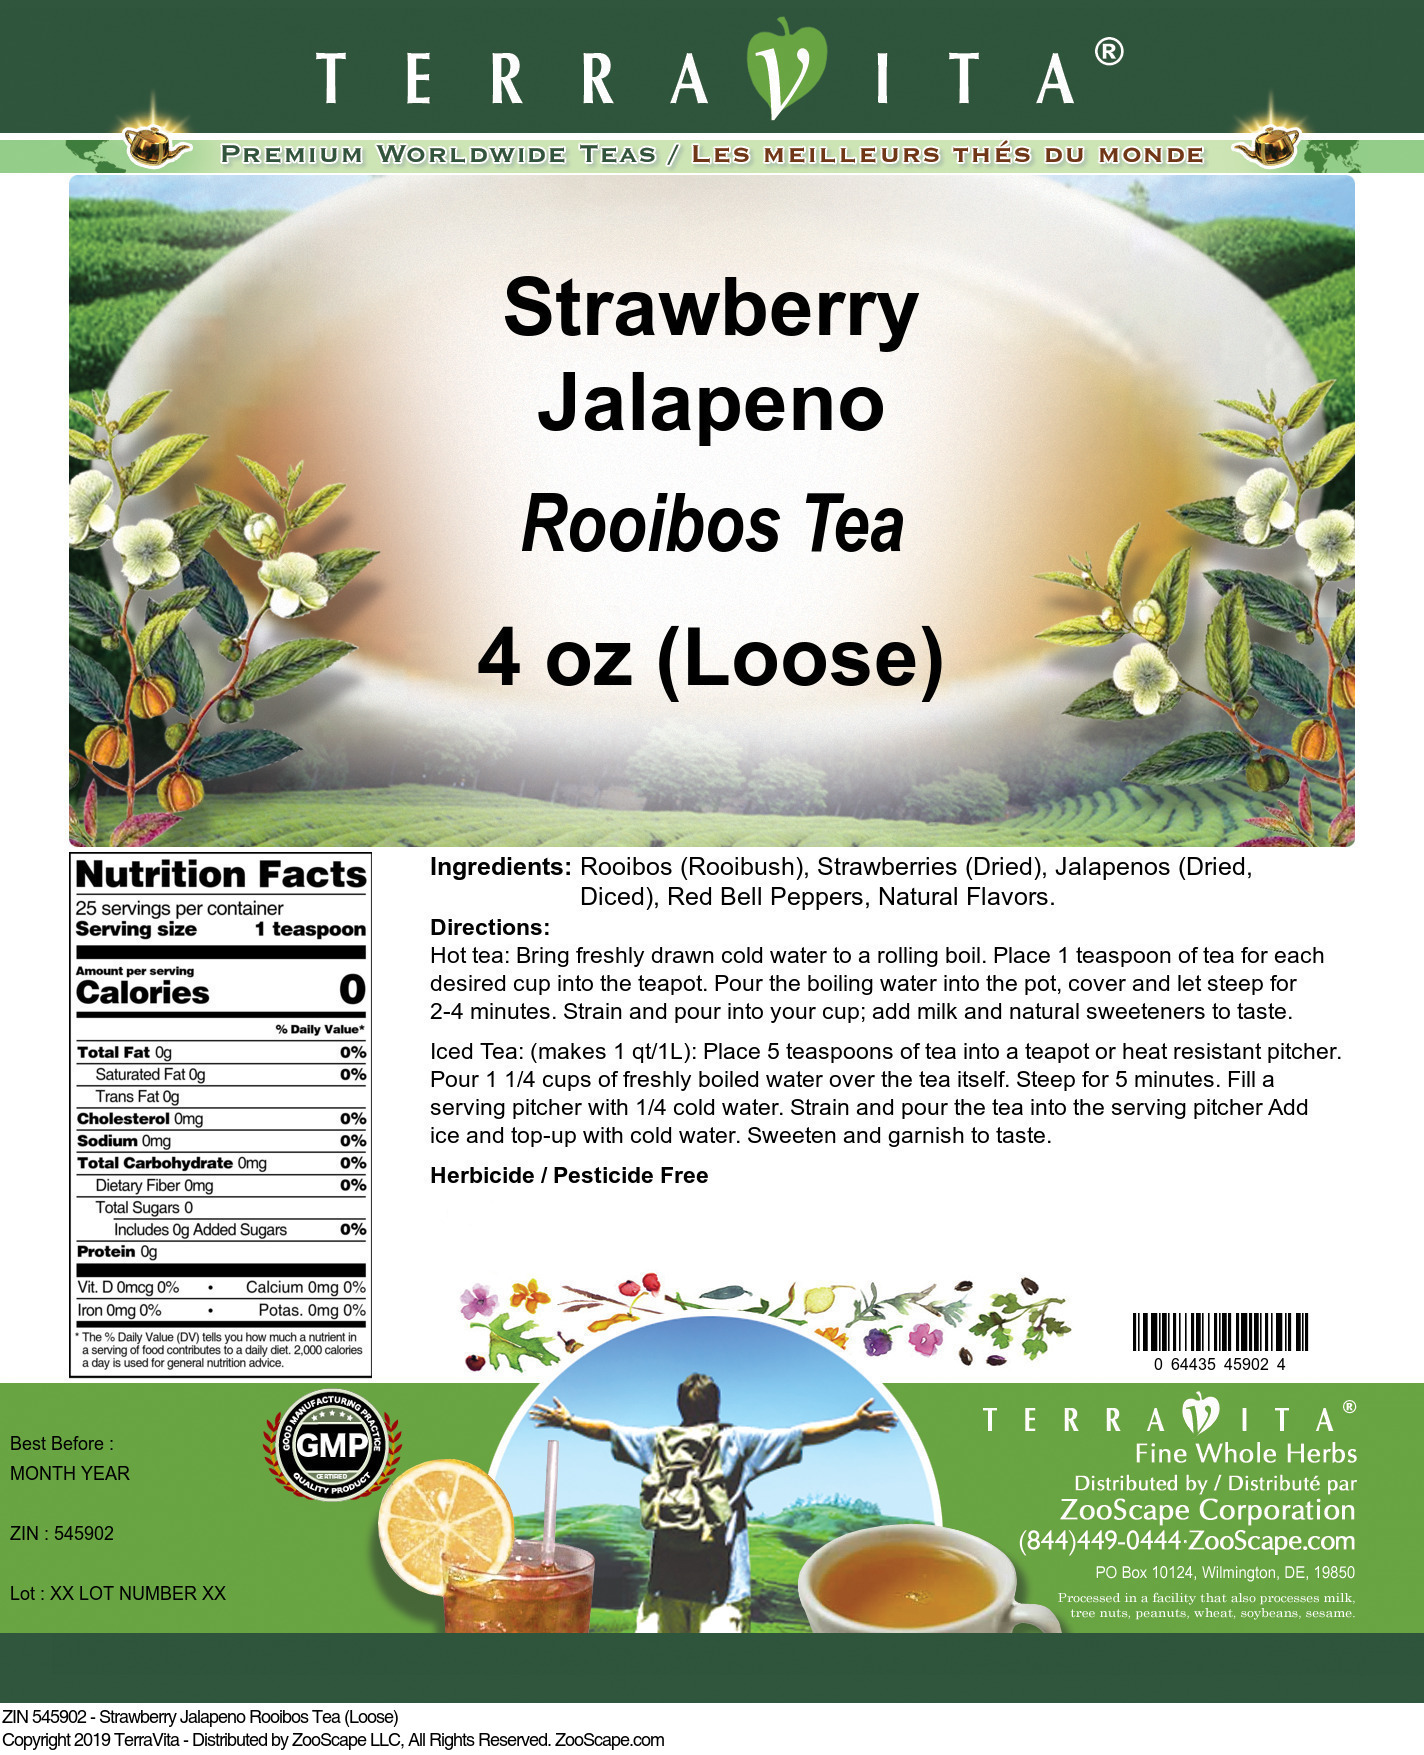 Strawberry Jalapeno Rooibos Tea (Loose) - Label